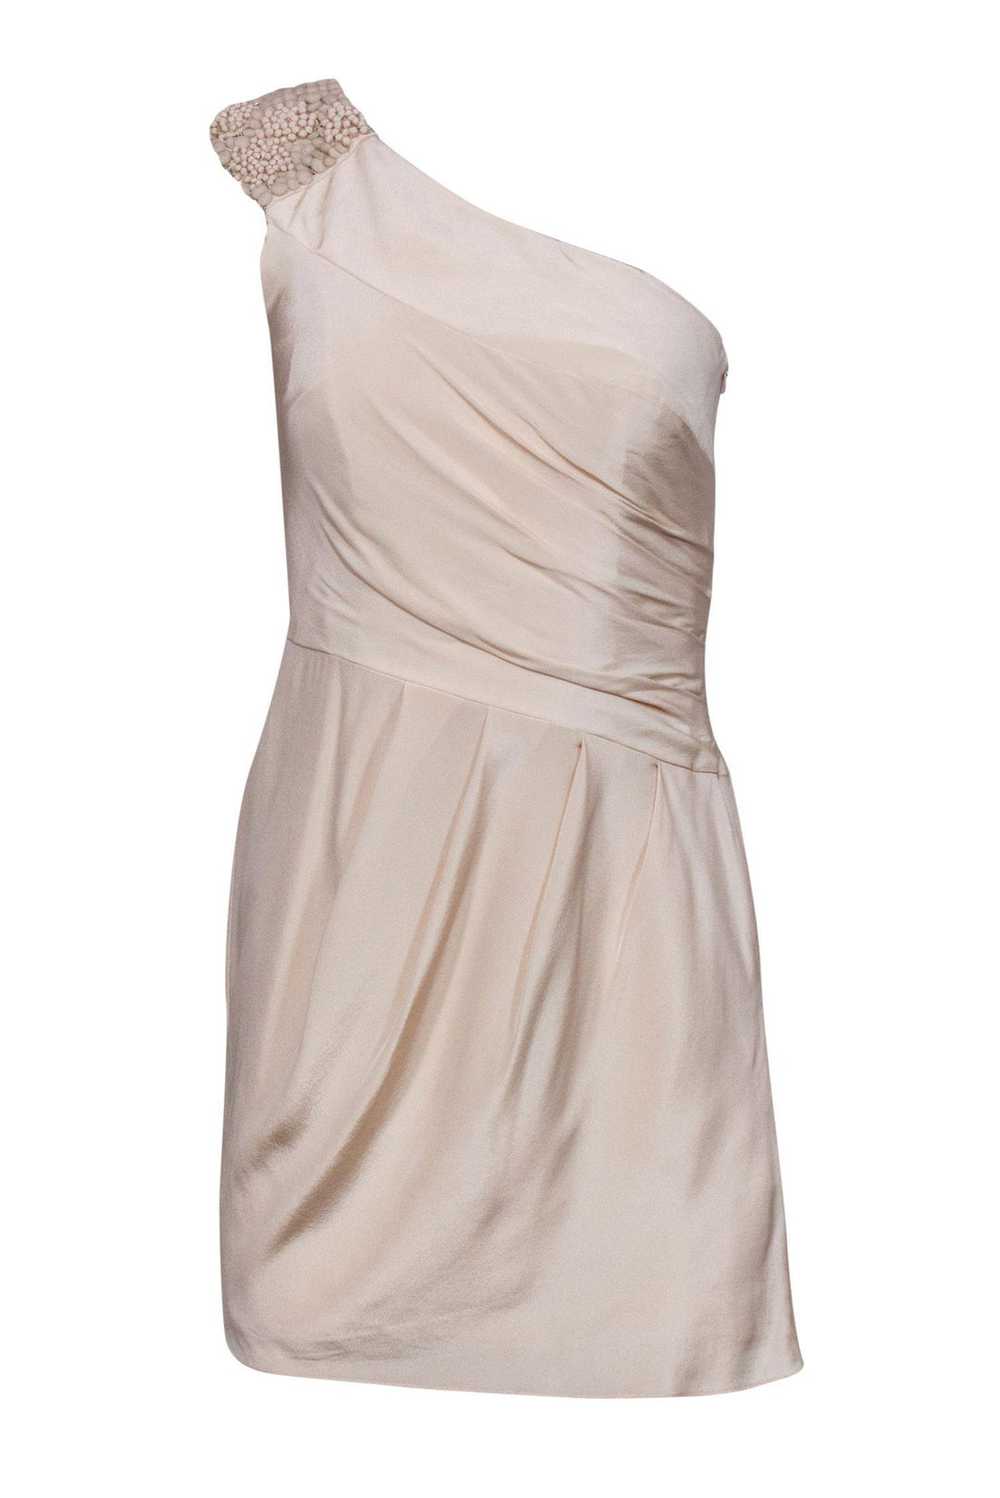 Tibi - Cream Satin One-Shoulder Beaded Dress Sz 4 - image 1